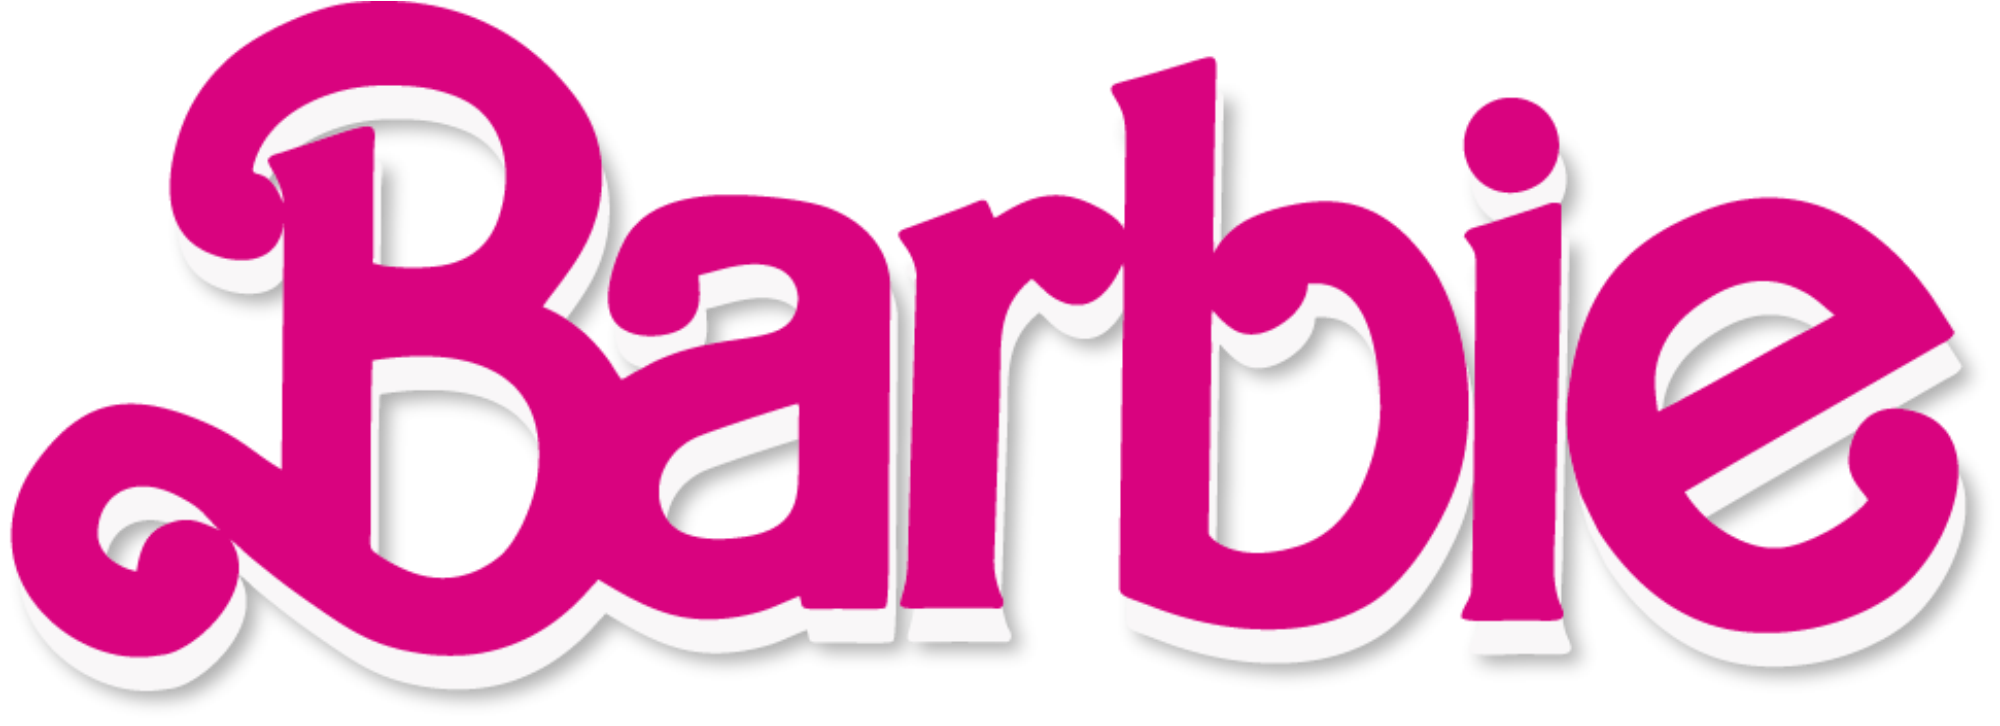 barbie-logo-png-33